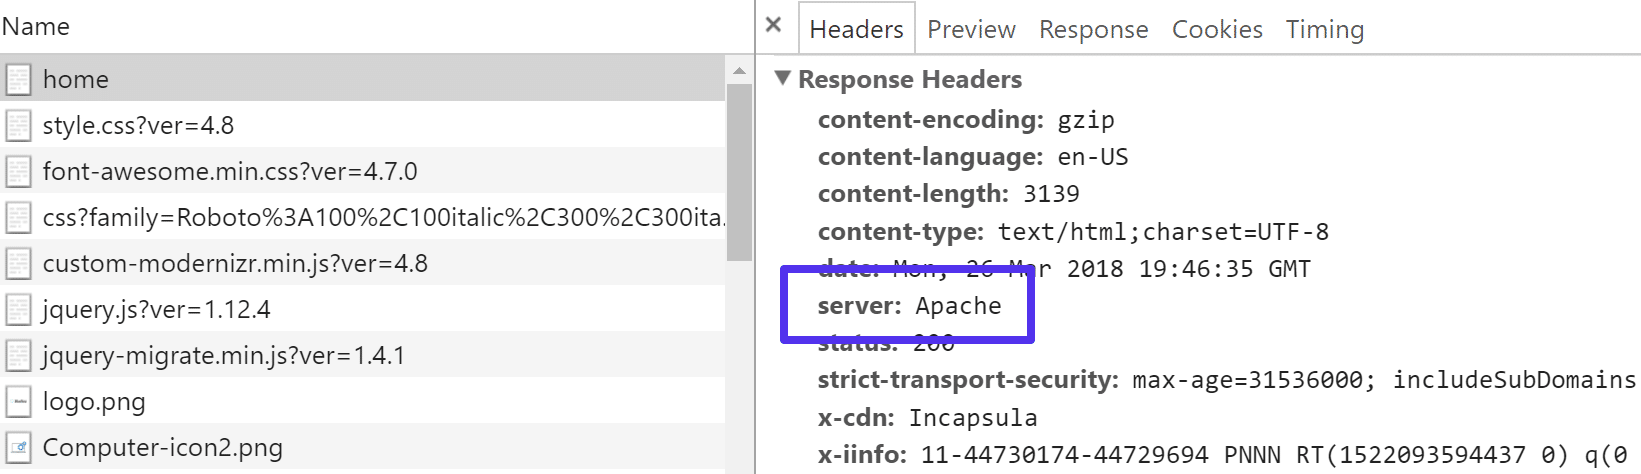 Apache HTTP header